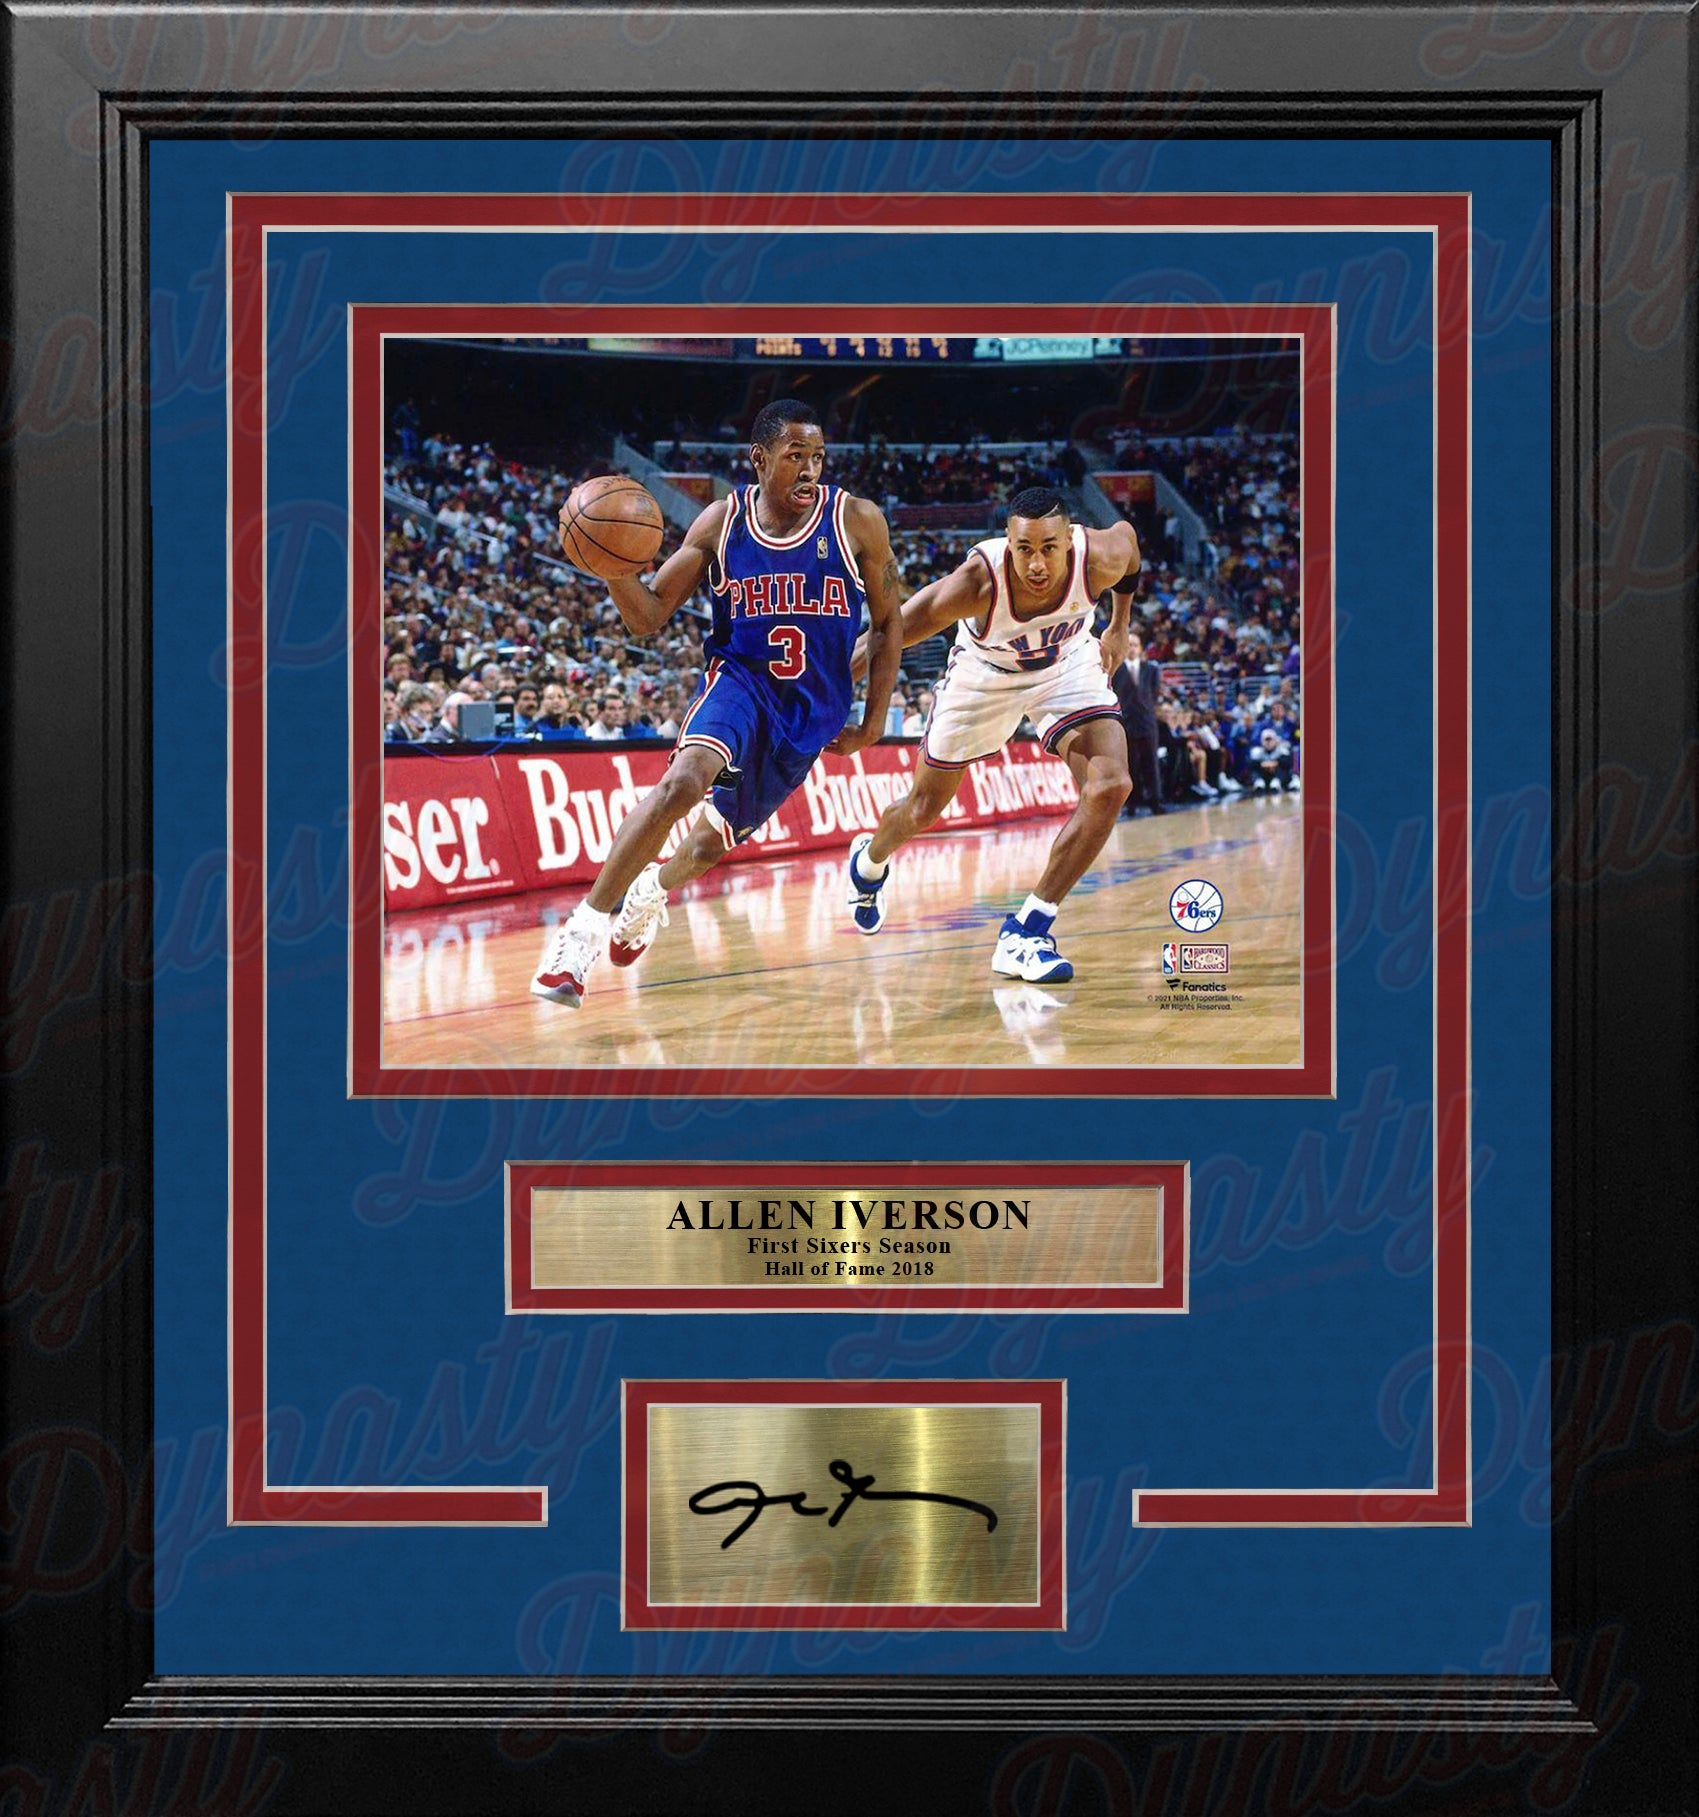 Official Philadelphia 76ers Collectibles, Memorabilia, Autographed